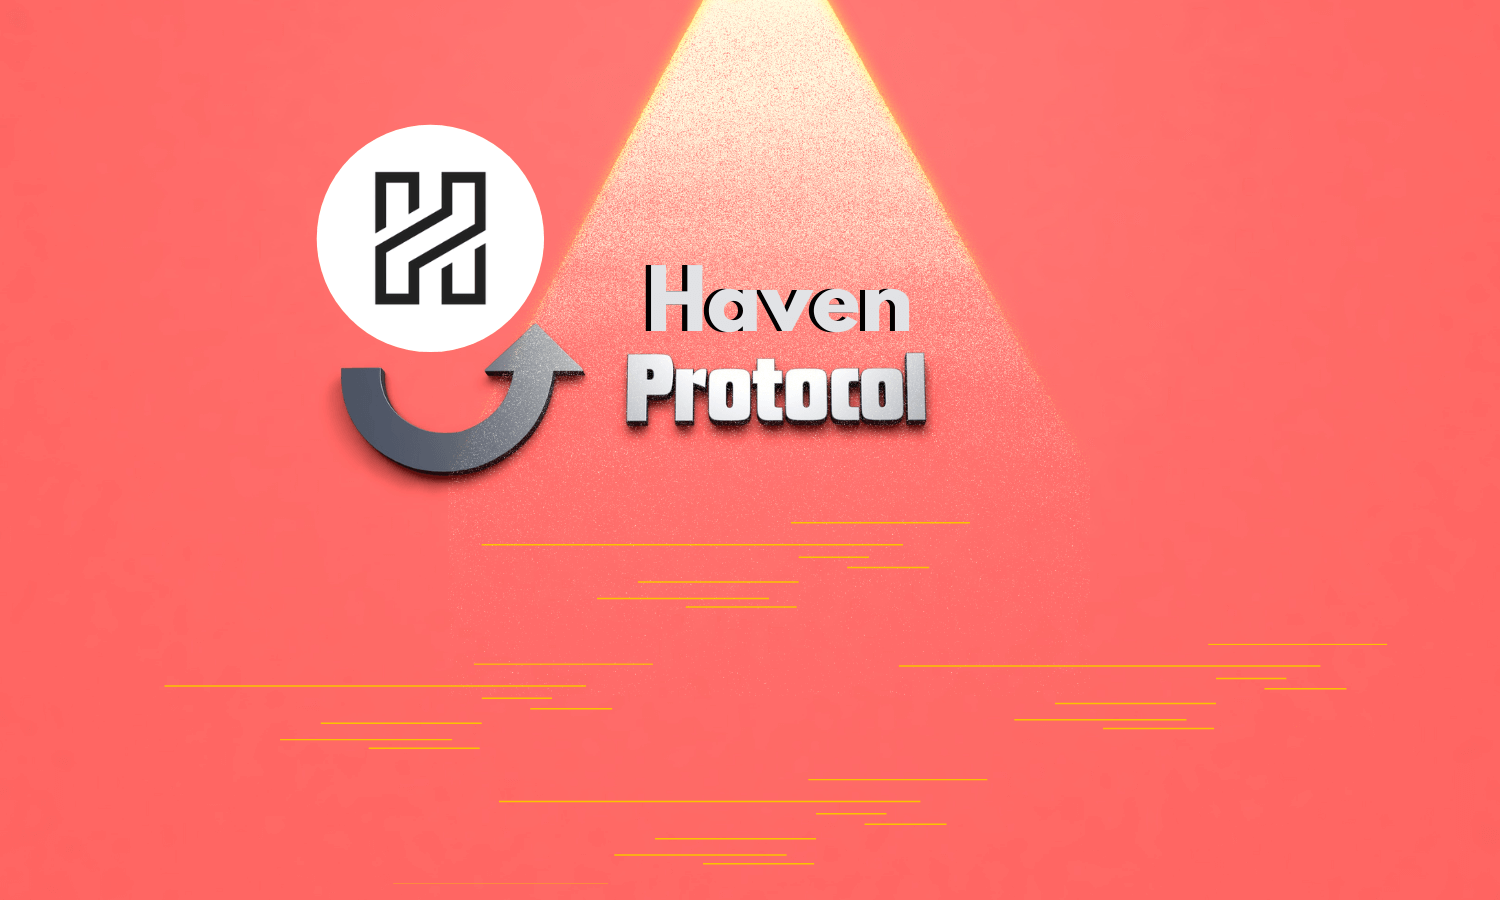 Haven protocol